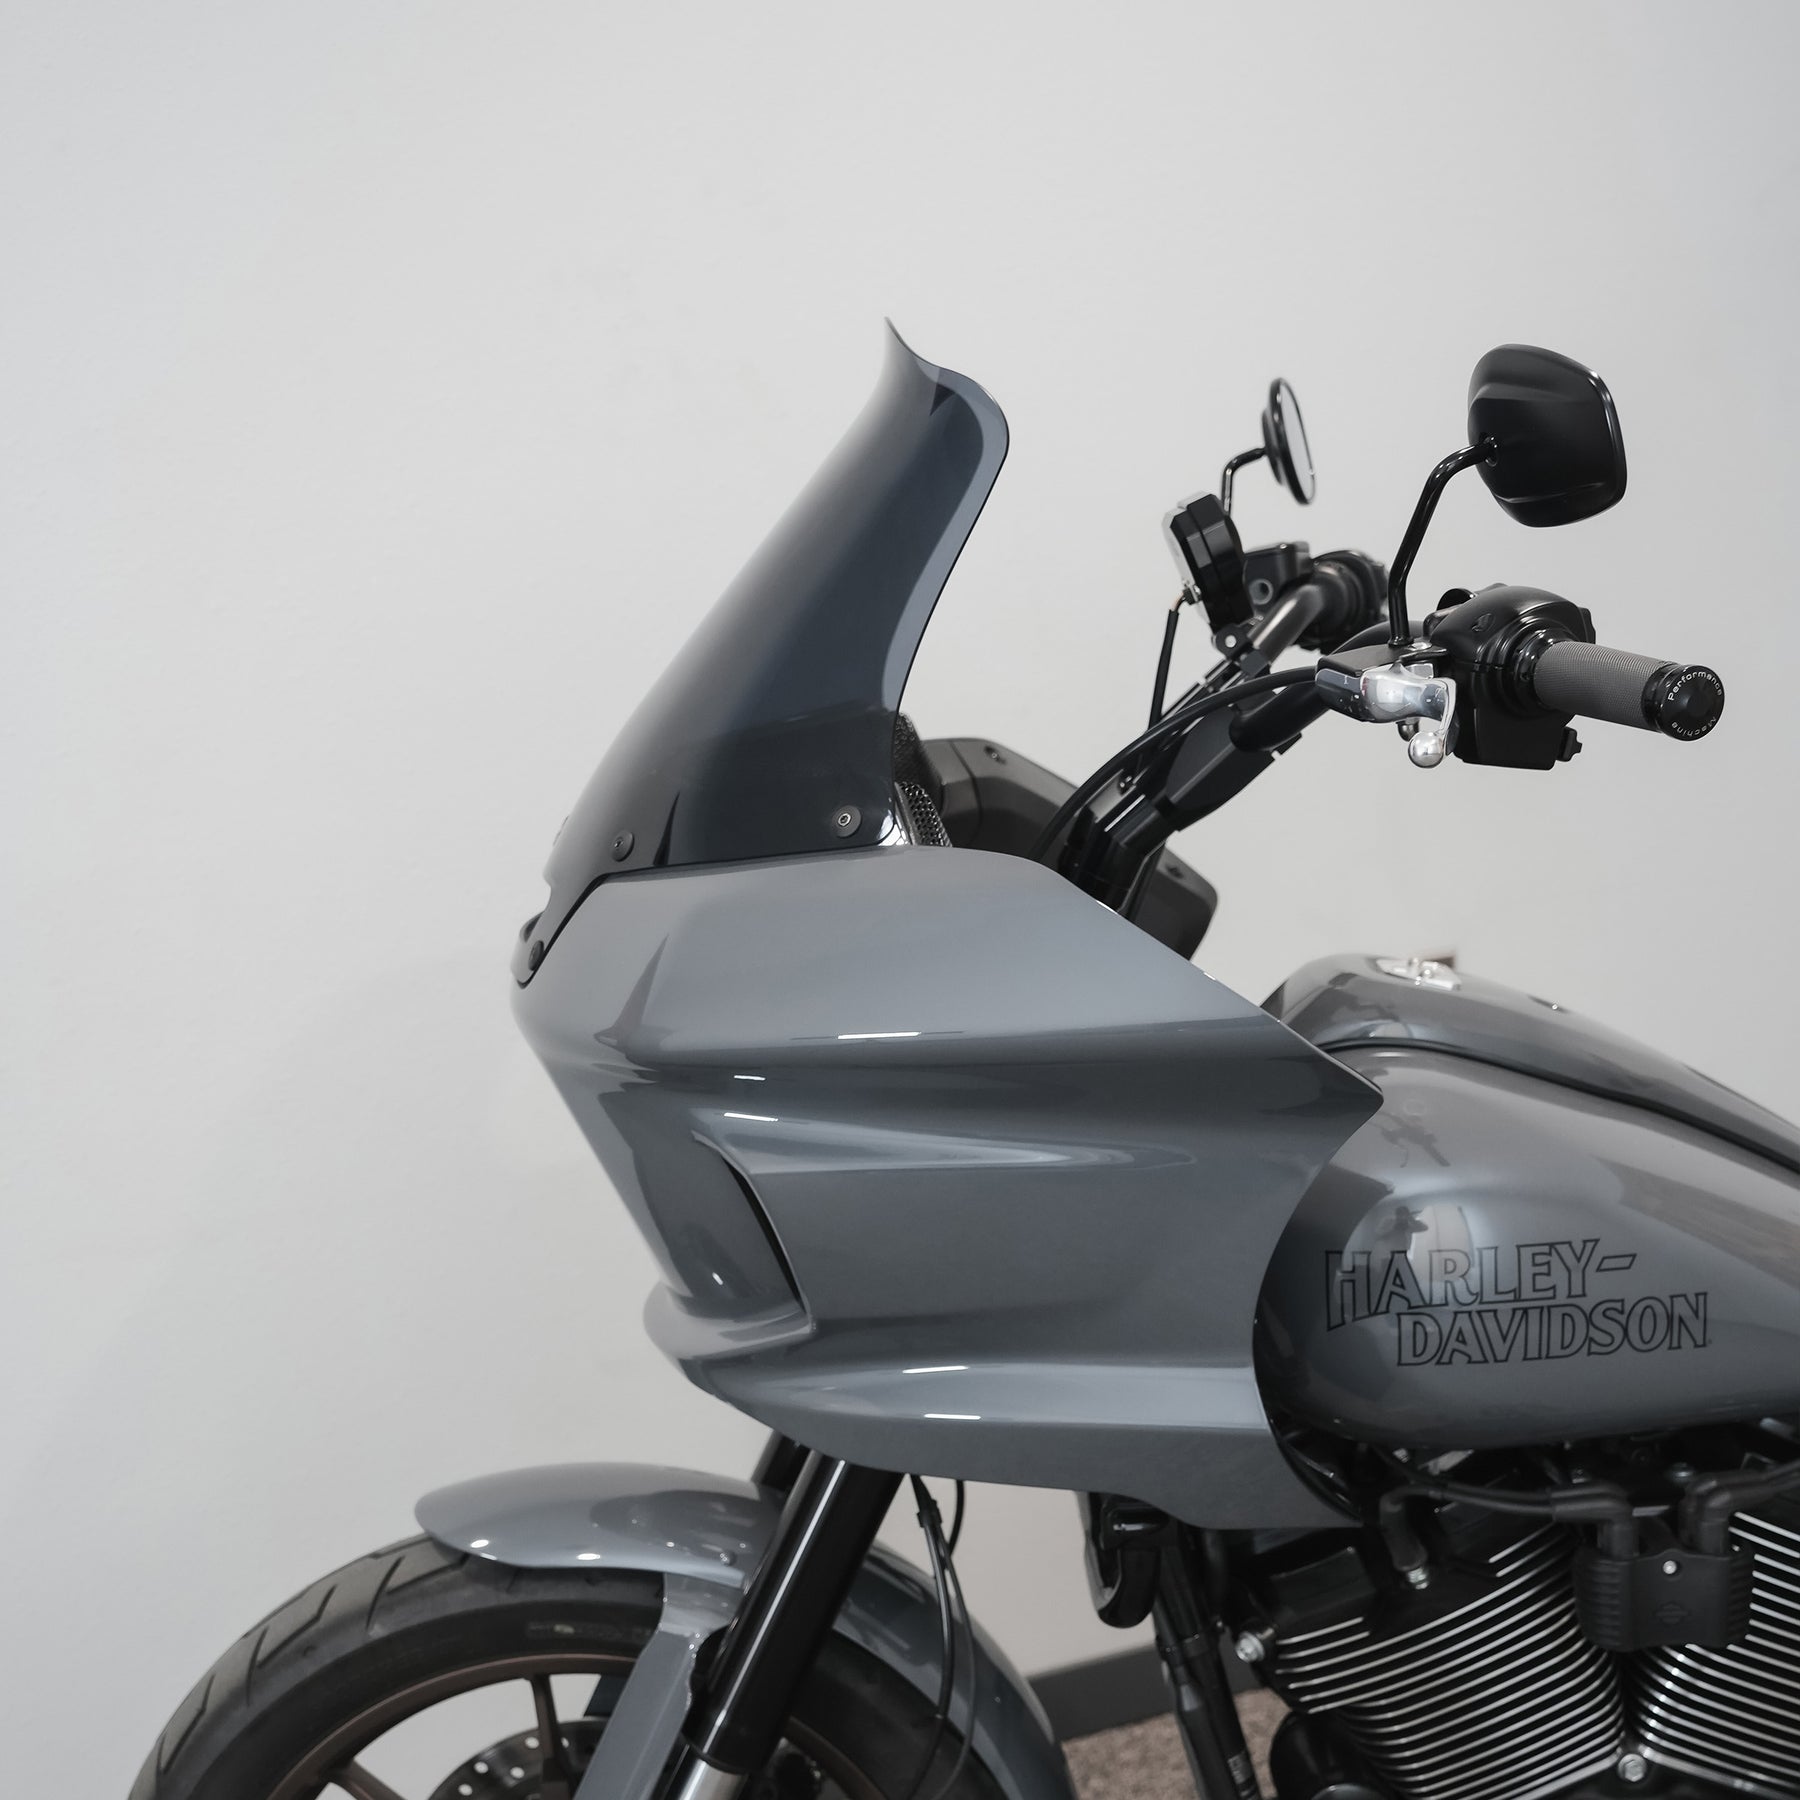 10" Dark Smoke Flare™ Windshield for Harley-Davidson Low Rider ST motorcycle models